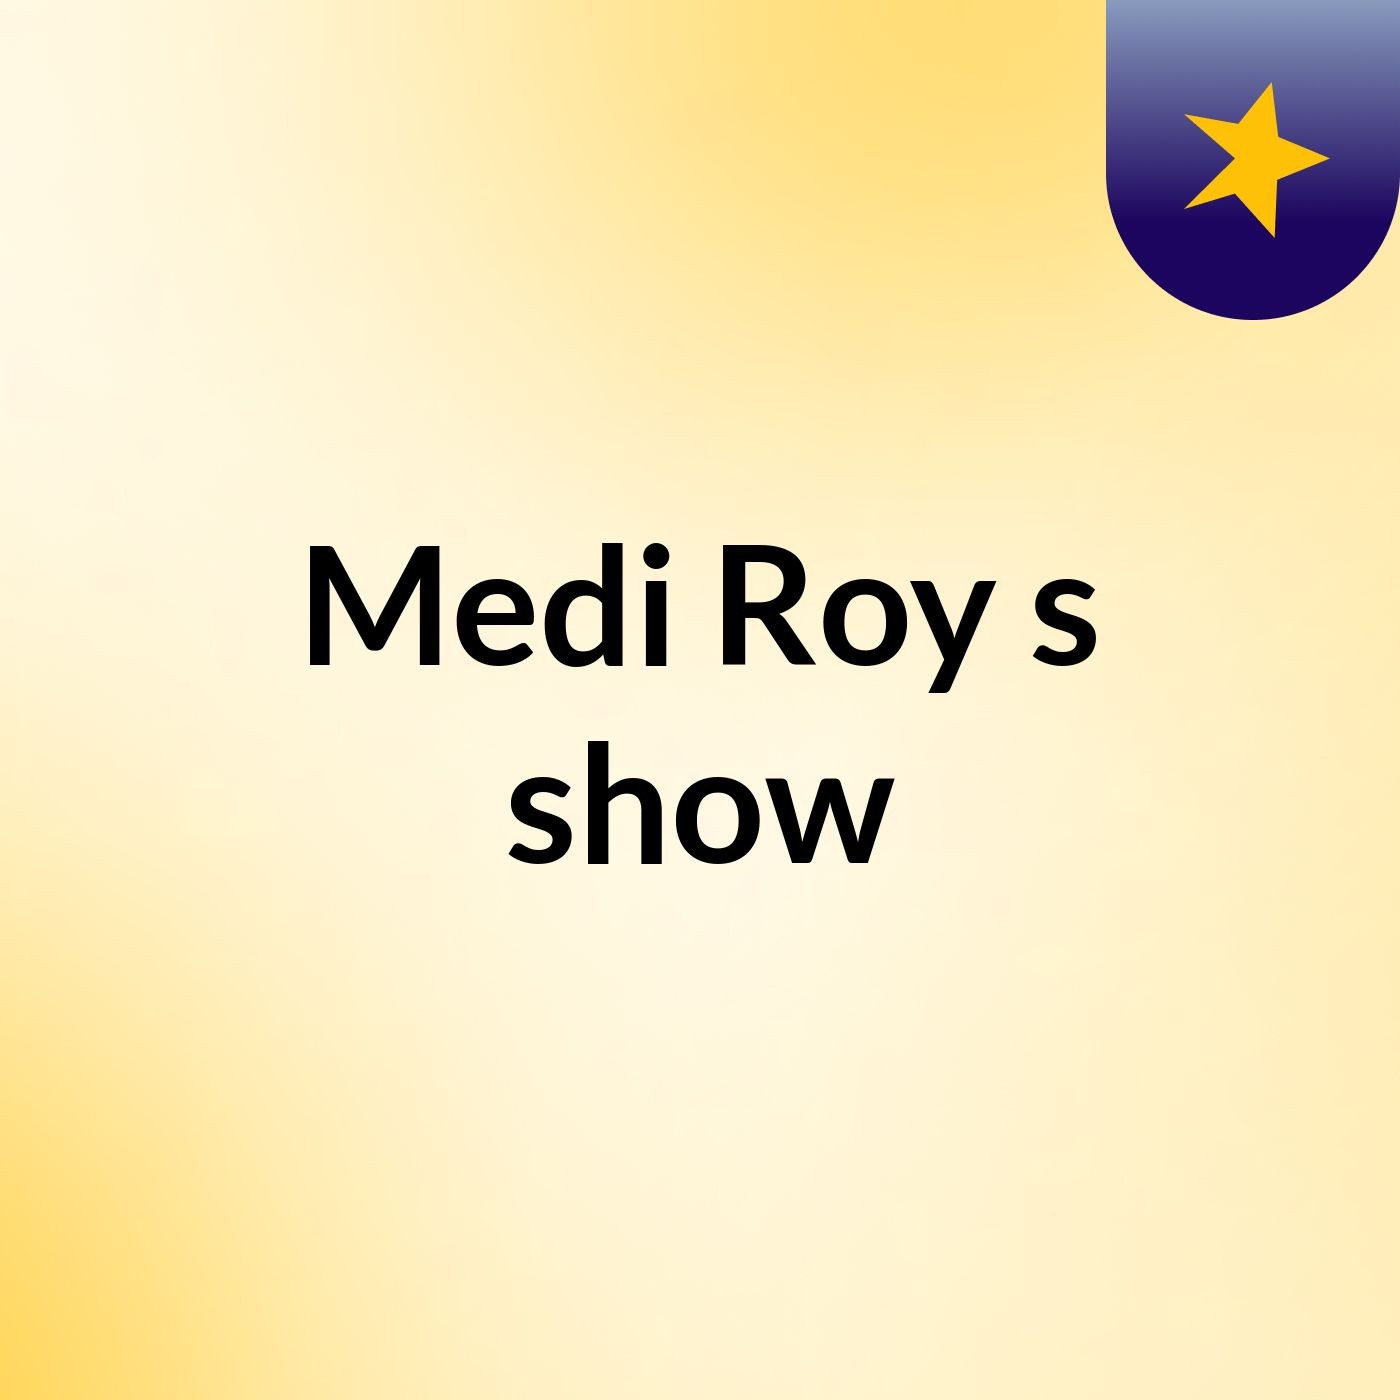 Medi Roy's show